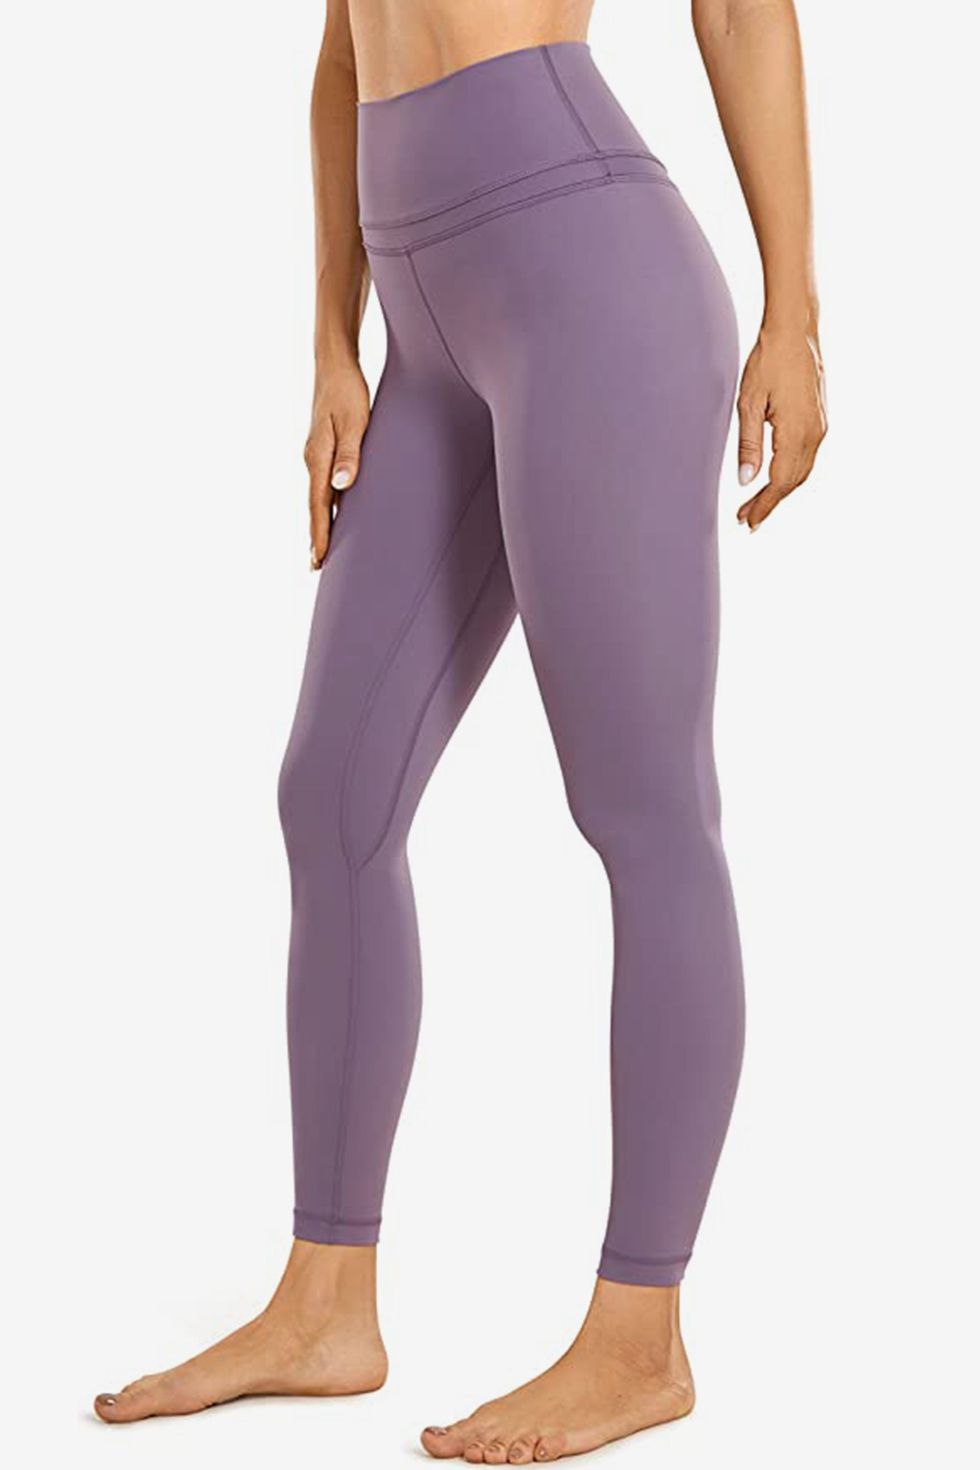 Women High Waist Yoga Pants Stretch Workout Leggings, S, Purple